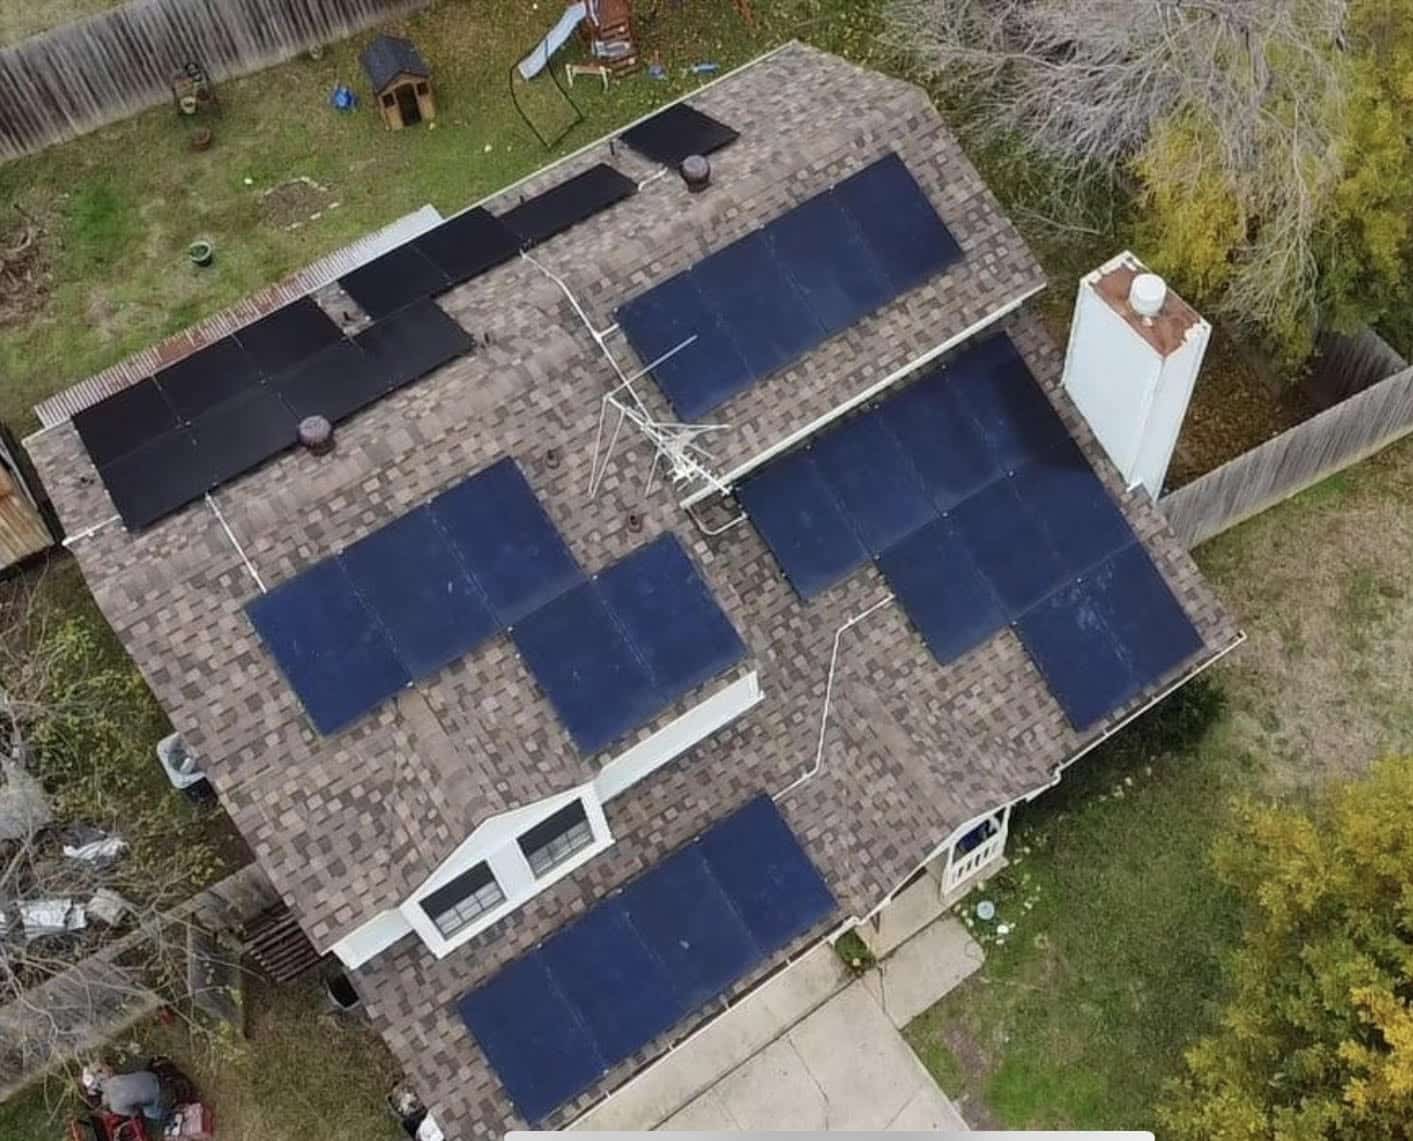 Future of residential solar